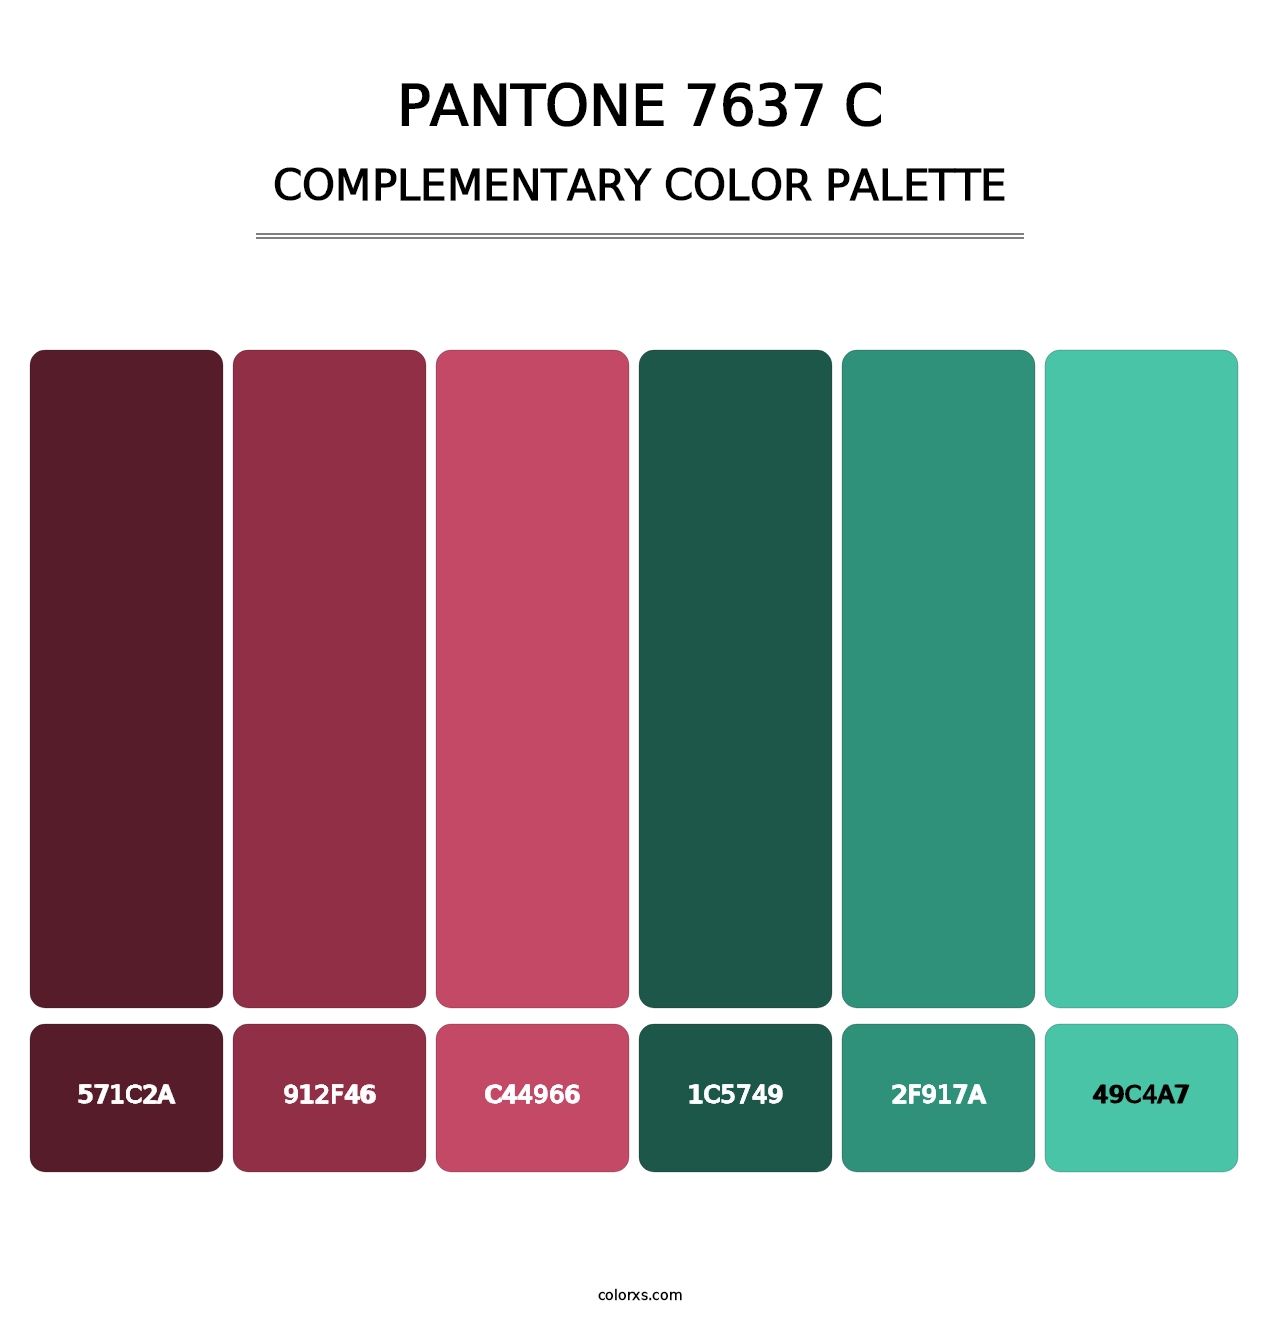 PANTONE 7637 C - Complementary Color Palette